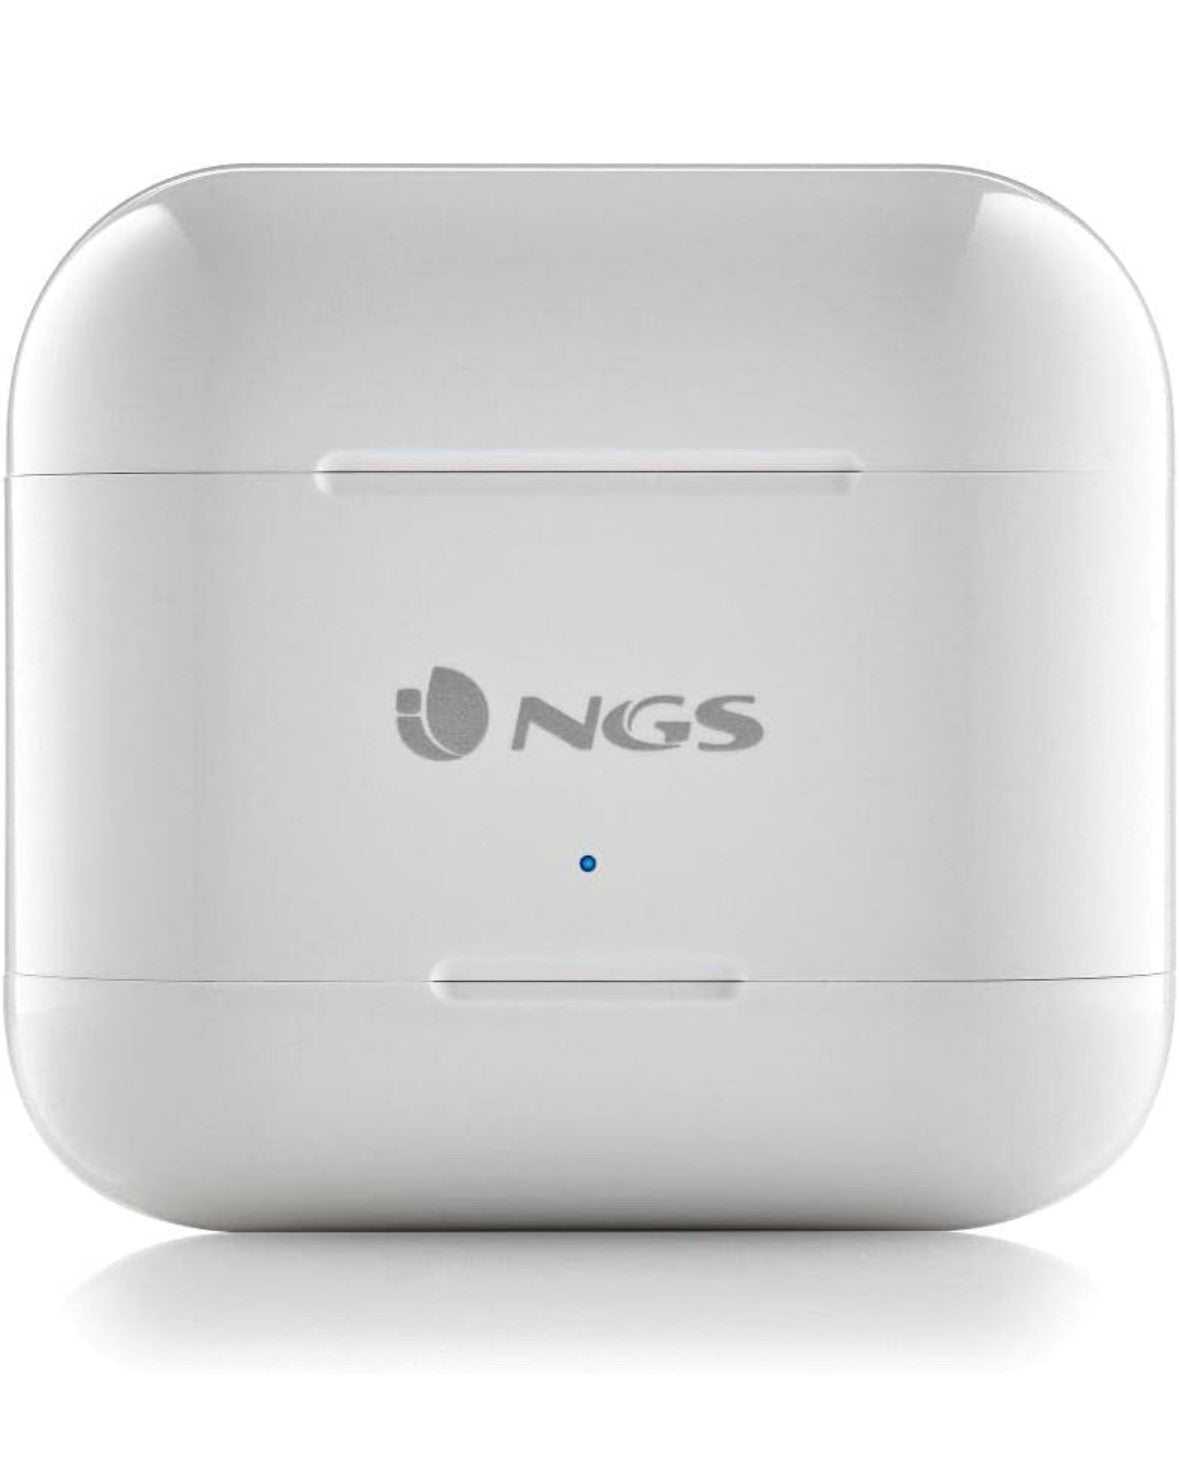 NGS Artica Duo Wireless Earphones - white